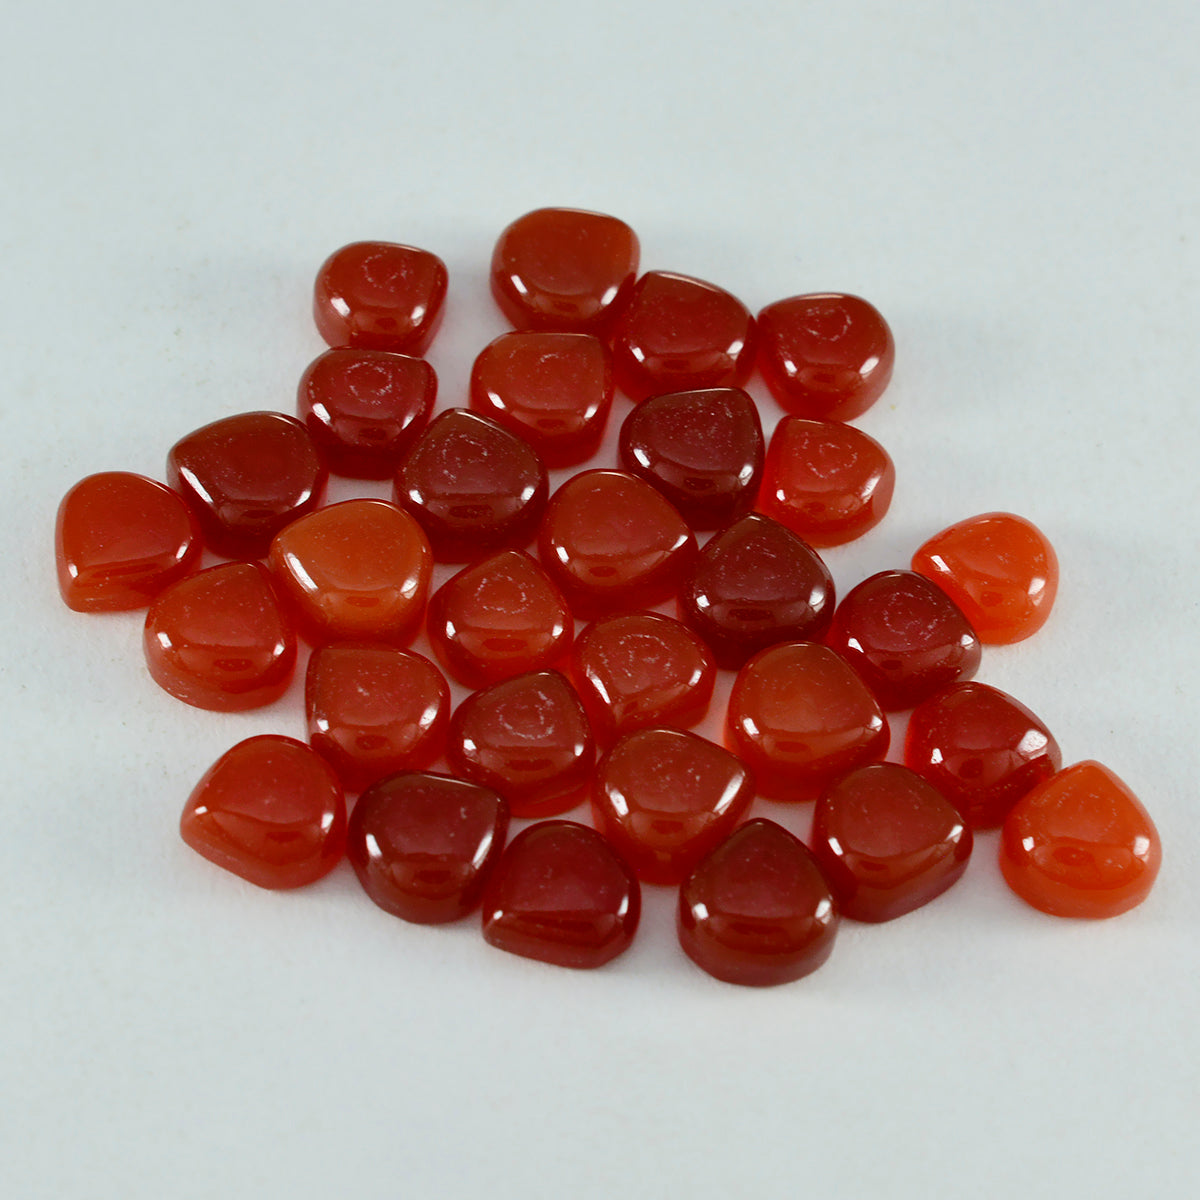 Riyogems 1PC Red Onyx Cabochon 5x5 mm Heart Shape beautiful Quality Loose Gemstone